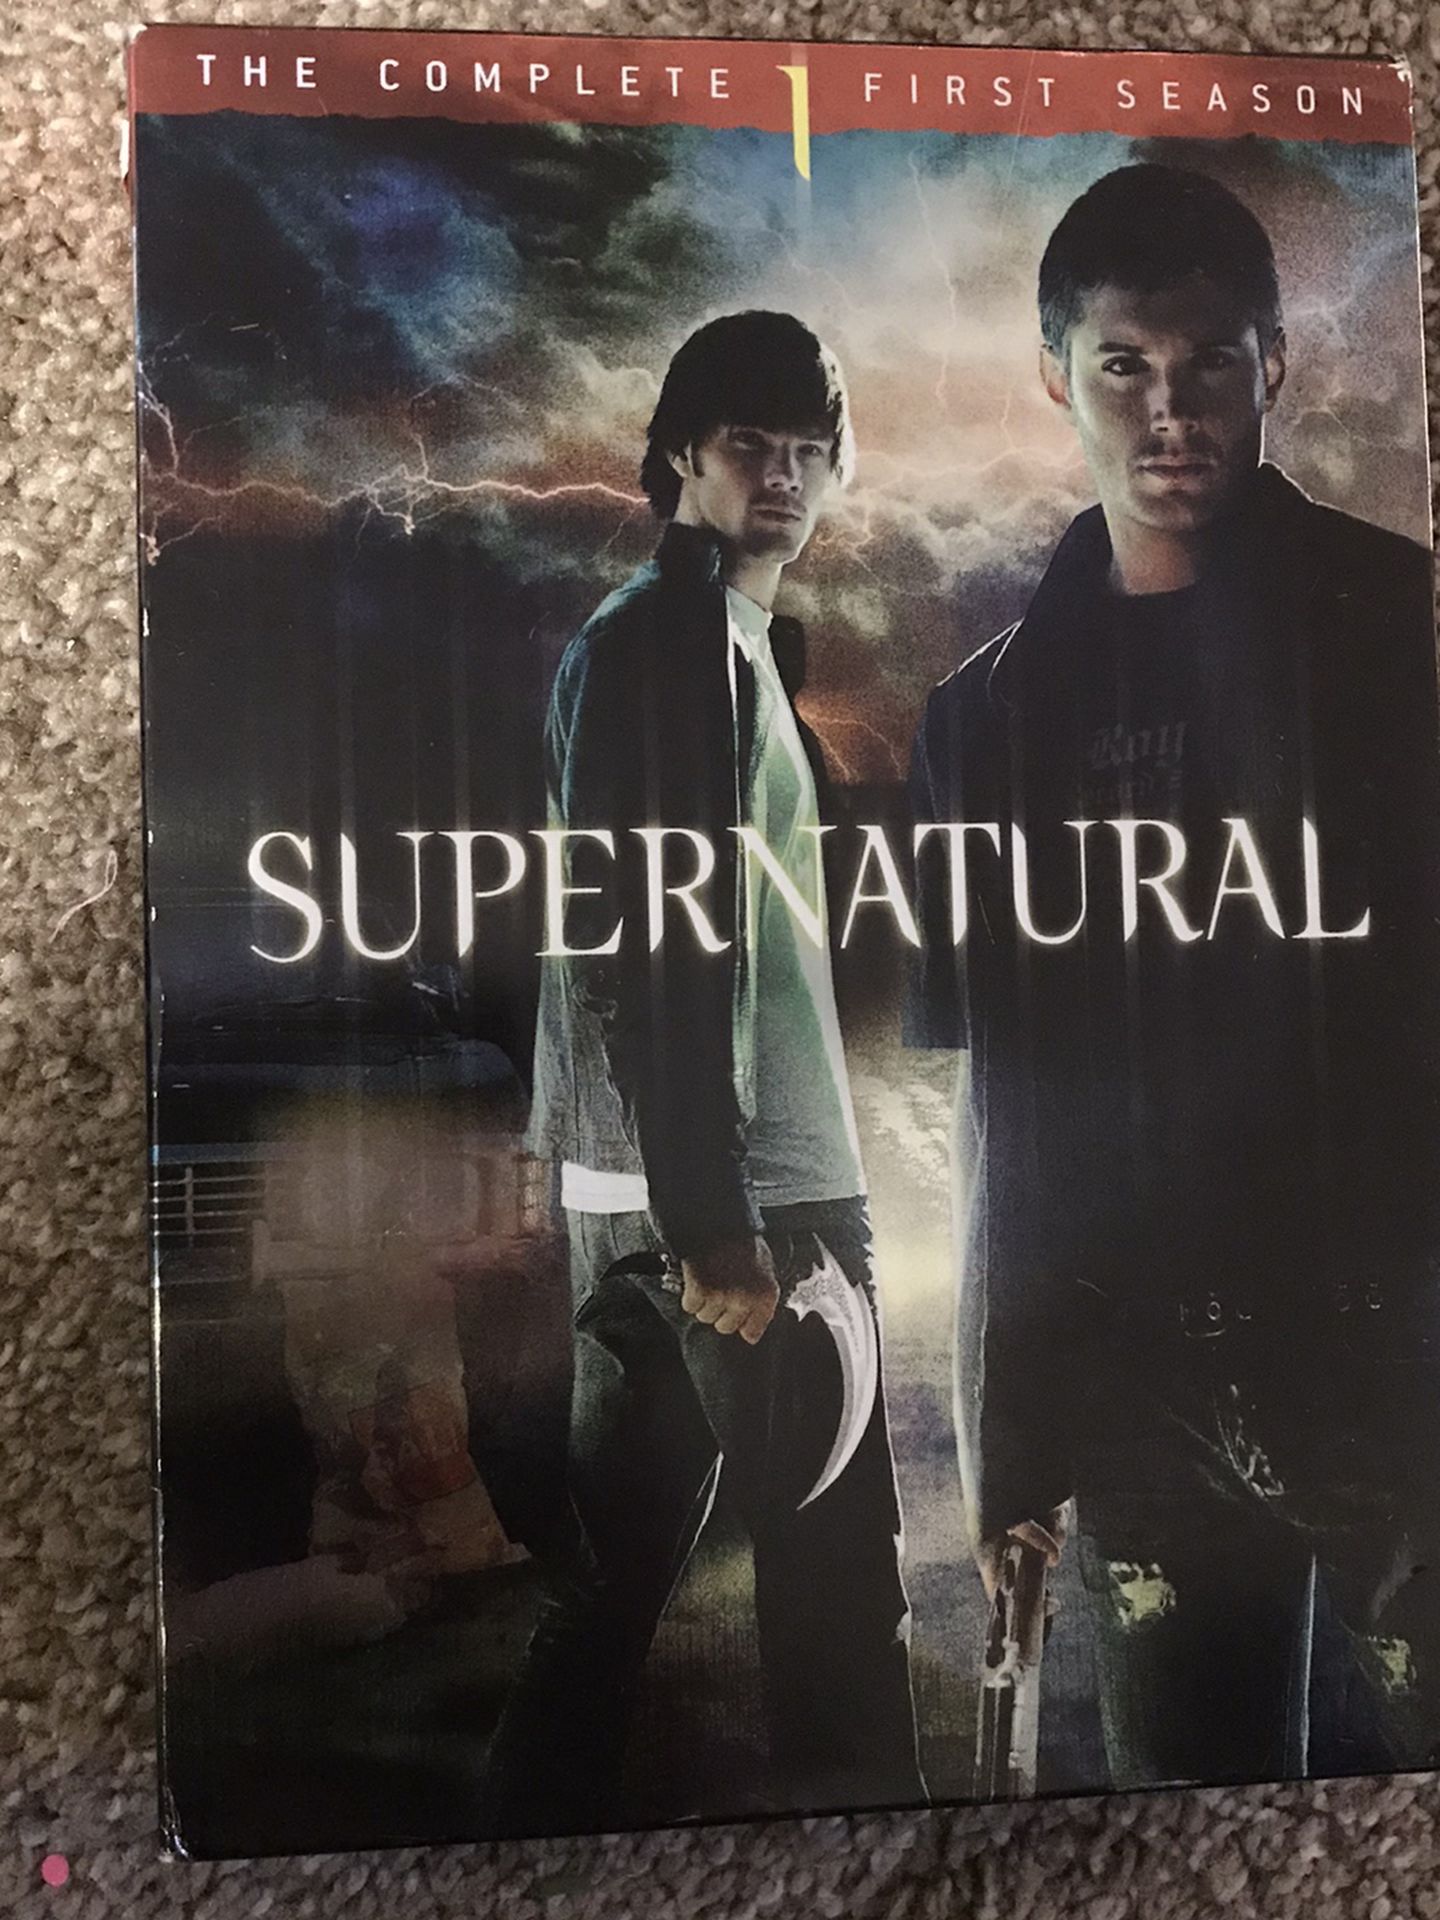 Supernatural Season 1 DVDs